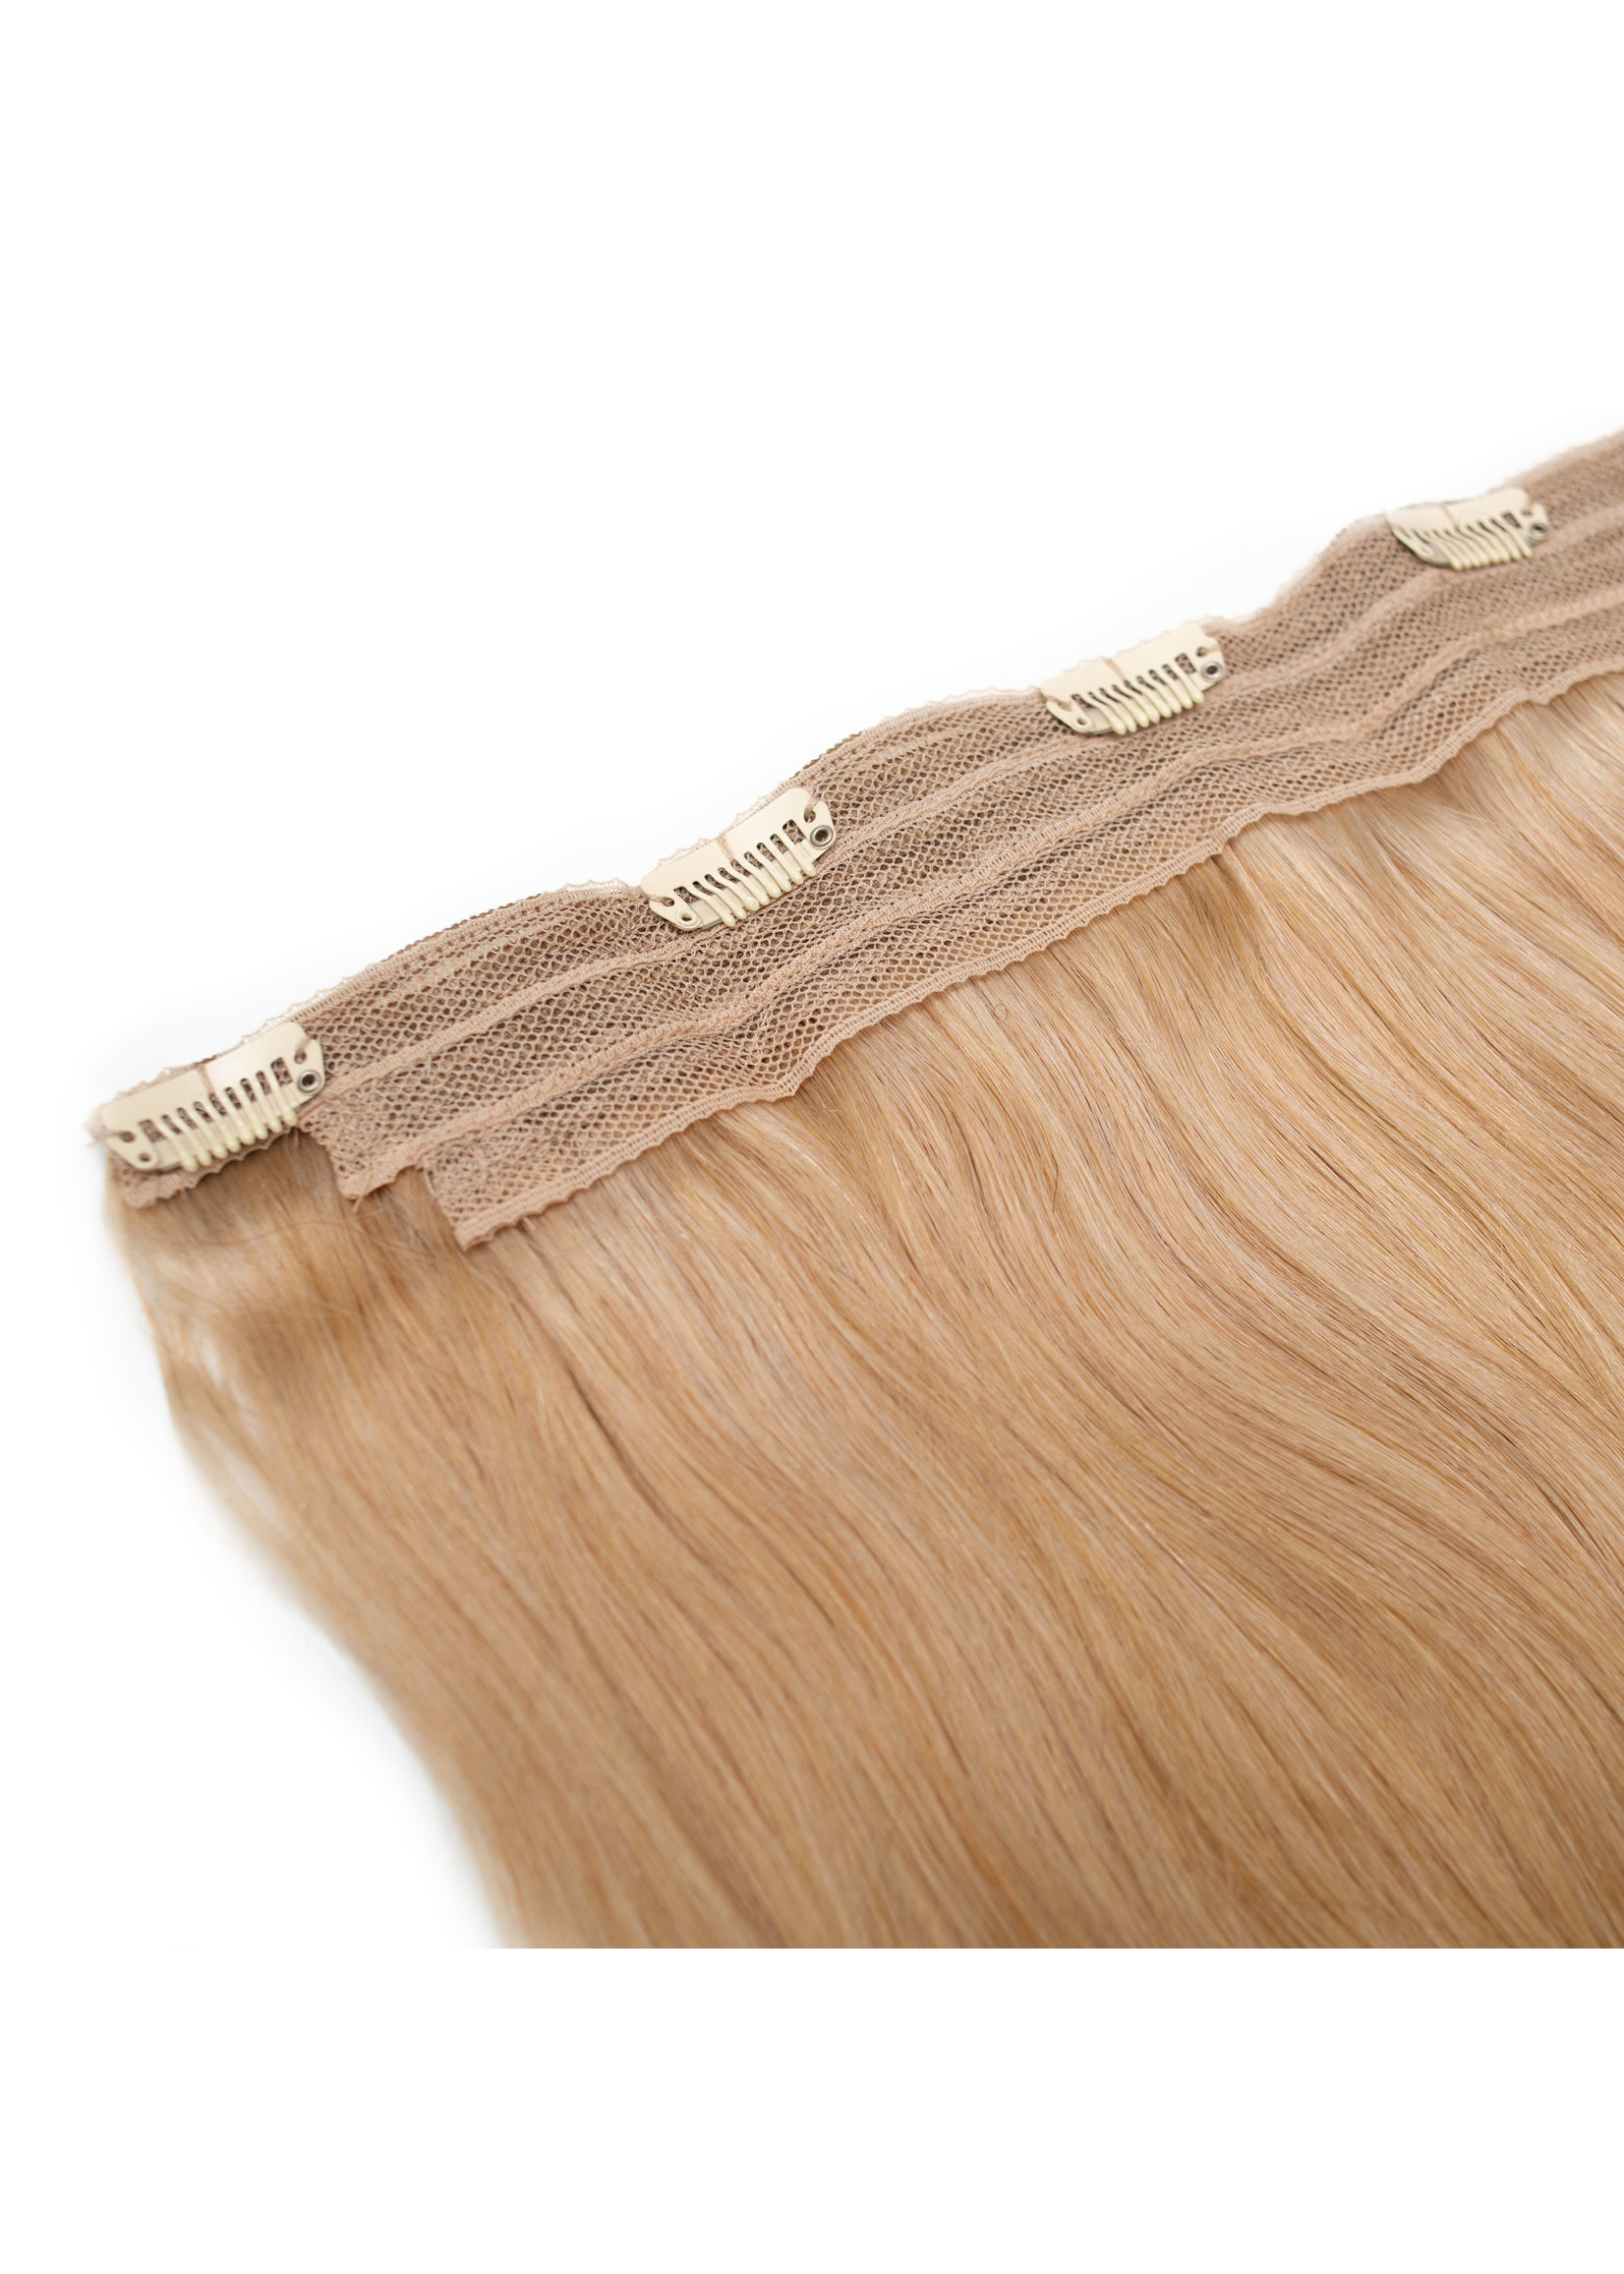 Seamless1 Seamless1 Human Hair Clip-in 1pc Hair Extensions 21.5 Inches - Vanilla